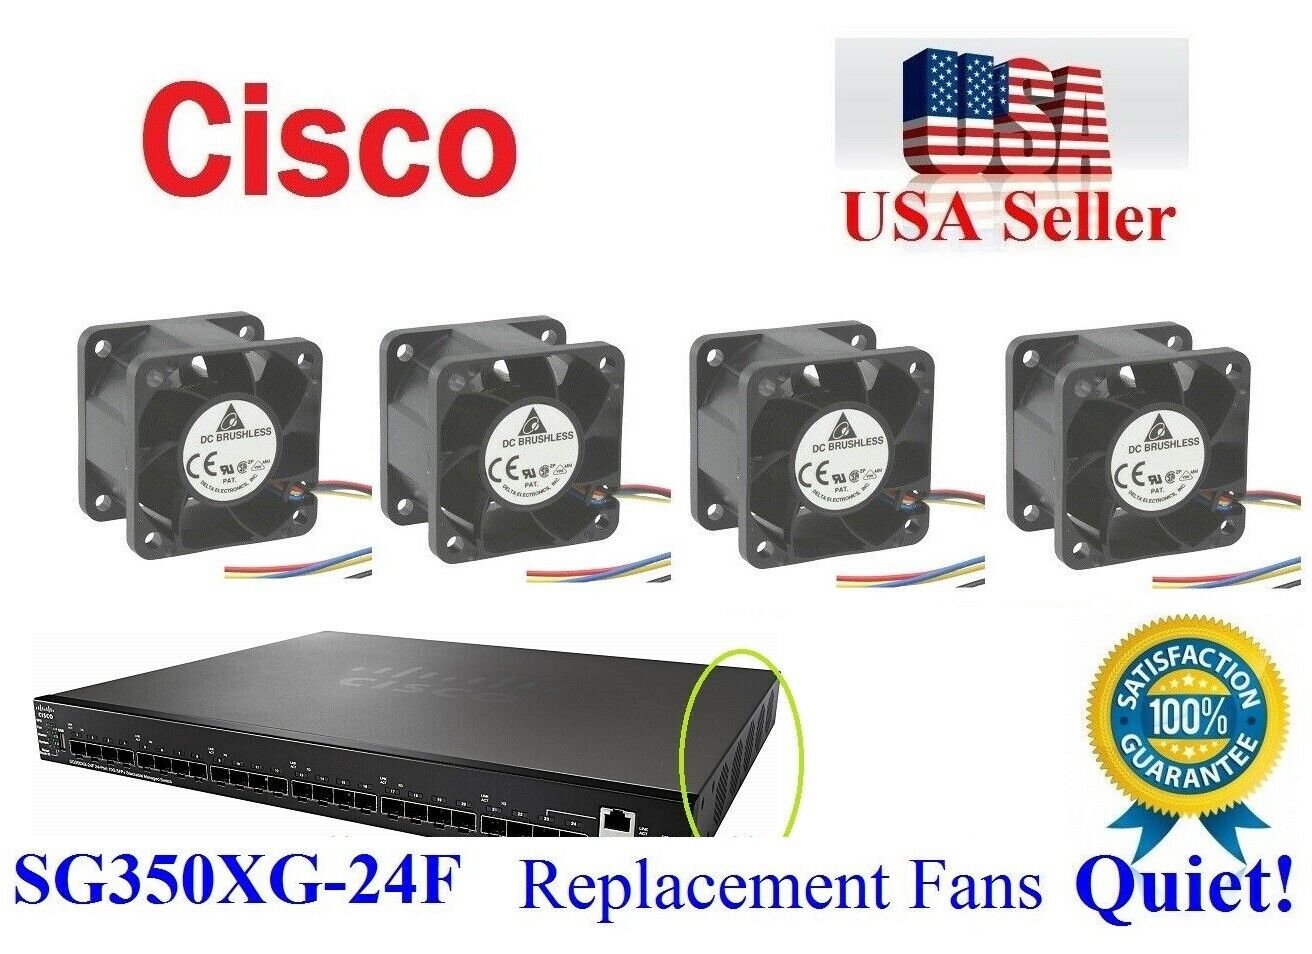 4Pack **Quiet** Replacement Fans Cisco SG350XG-24F Low Noise Best Home Office